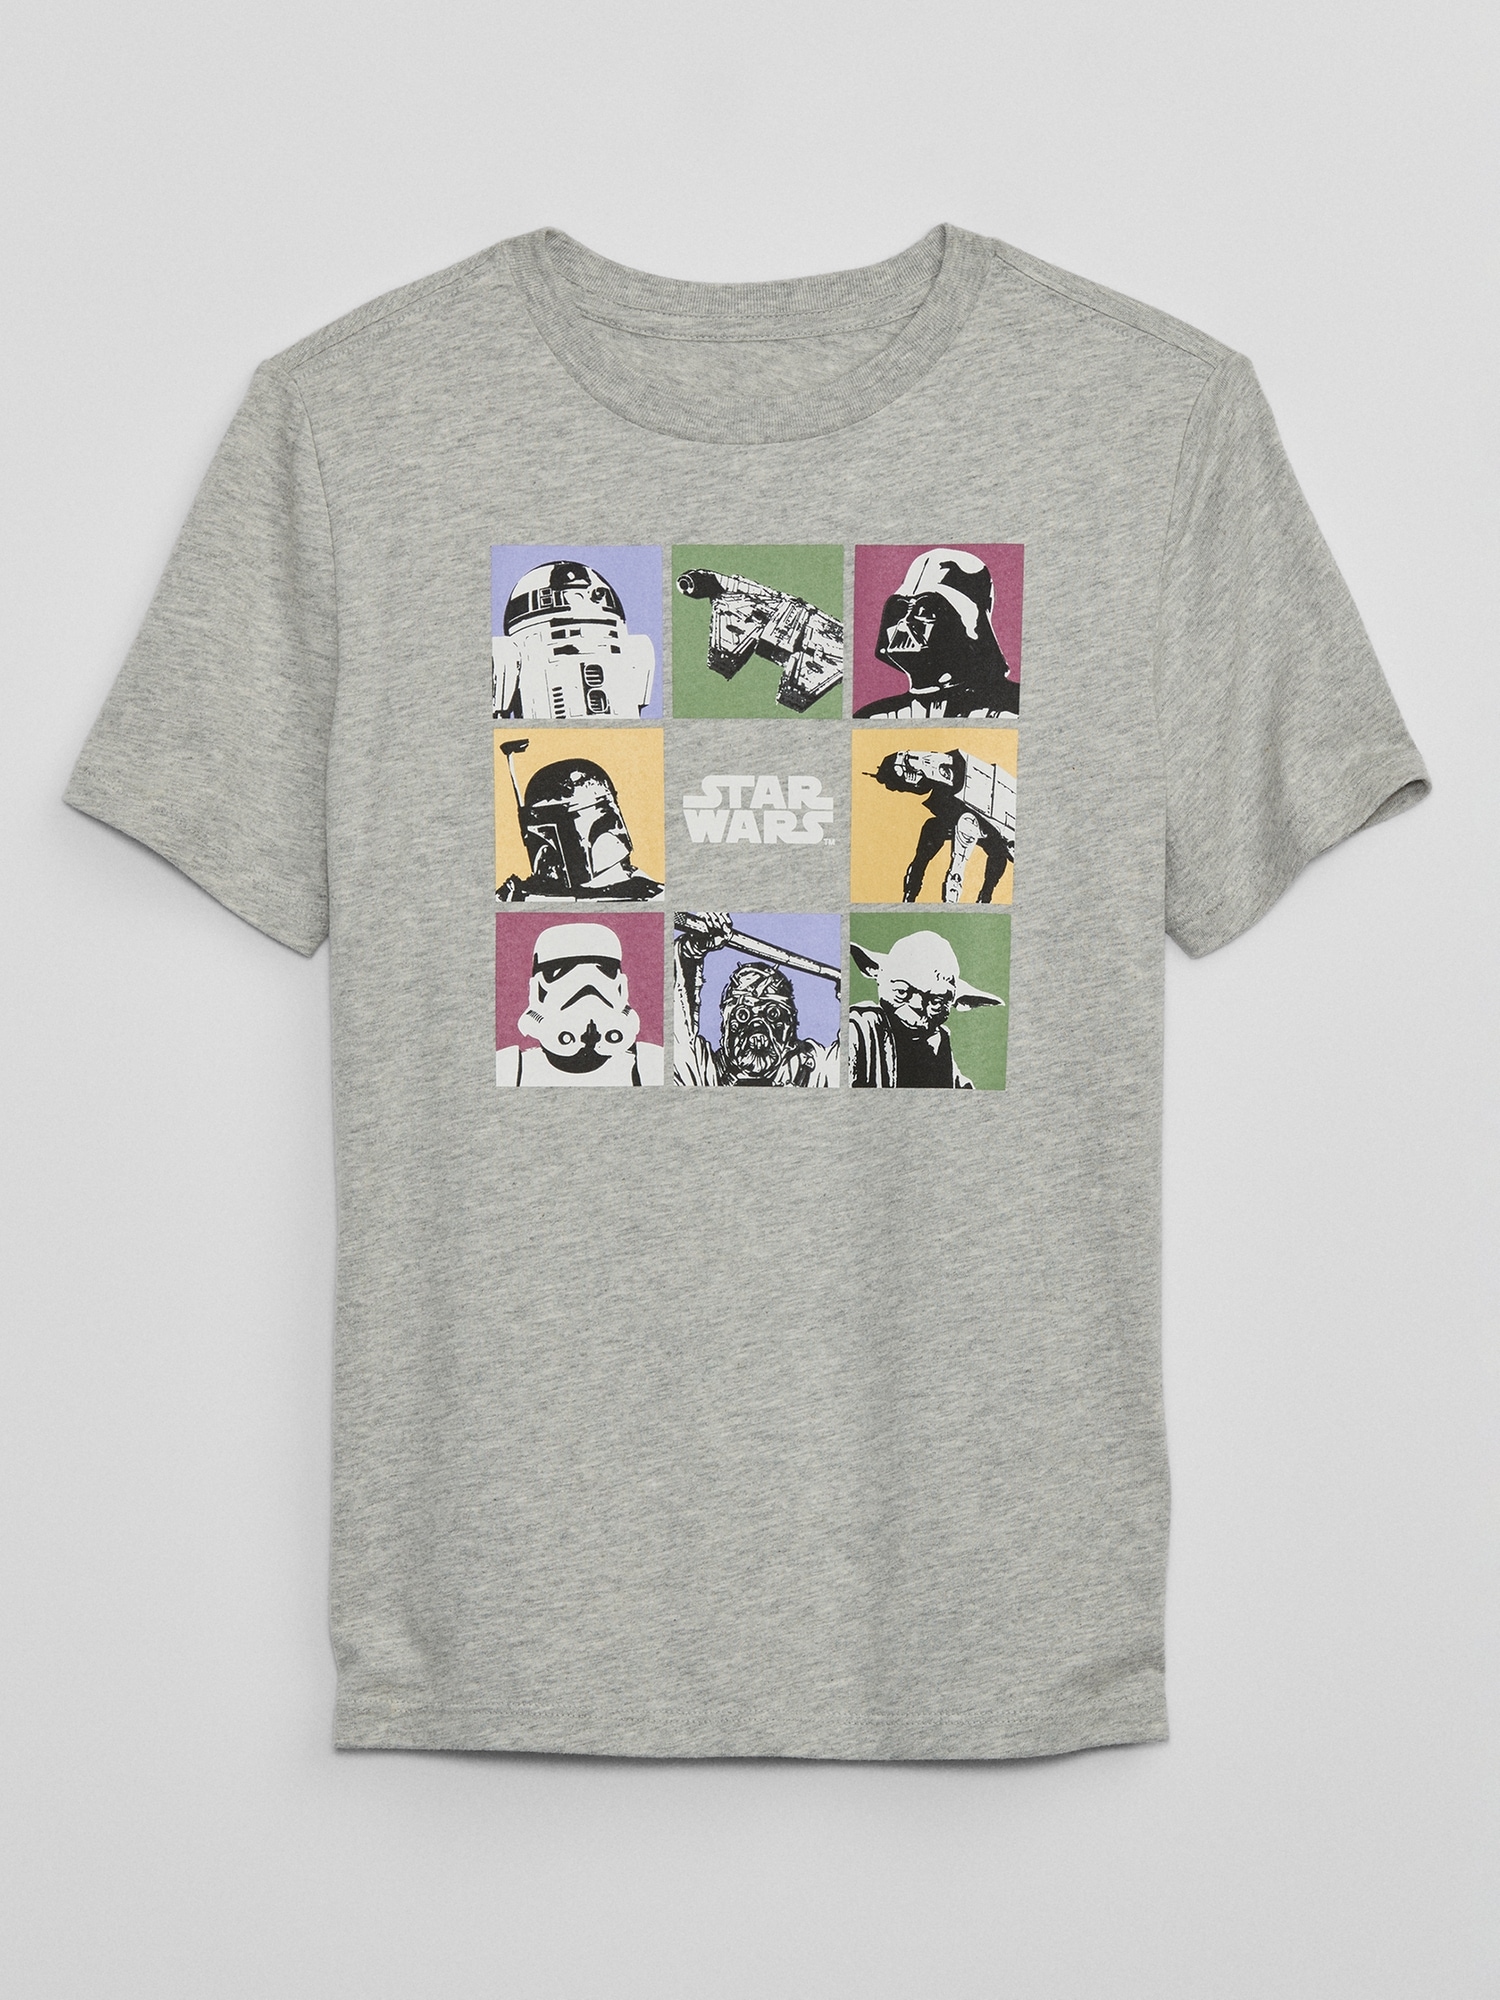 GapKids | Star Wars™ Graphic T-Shirt | Gap Factory